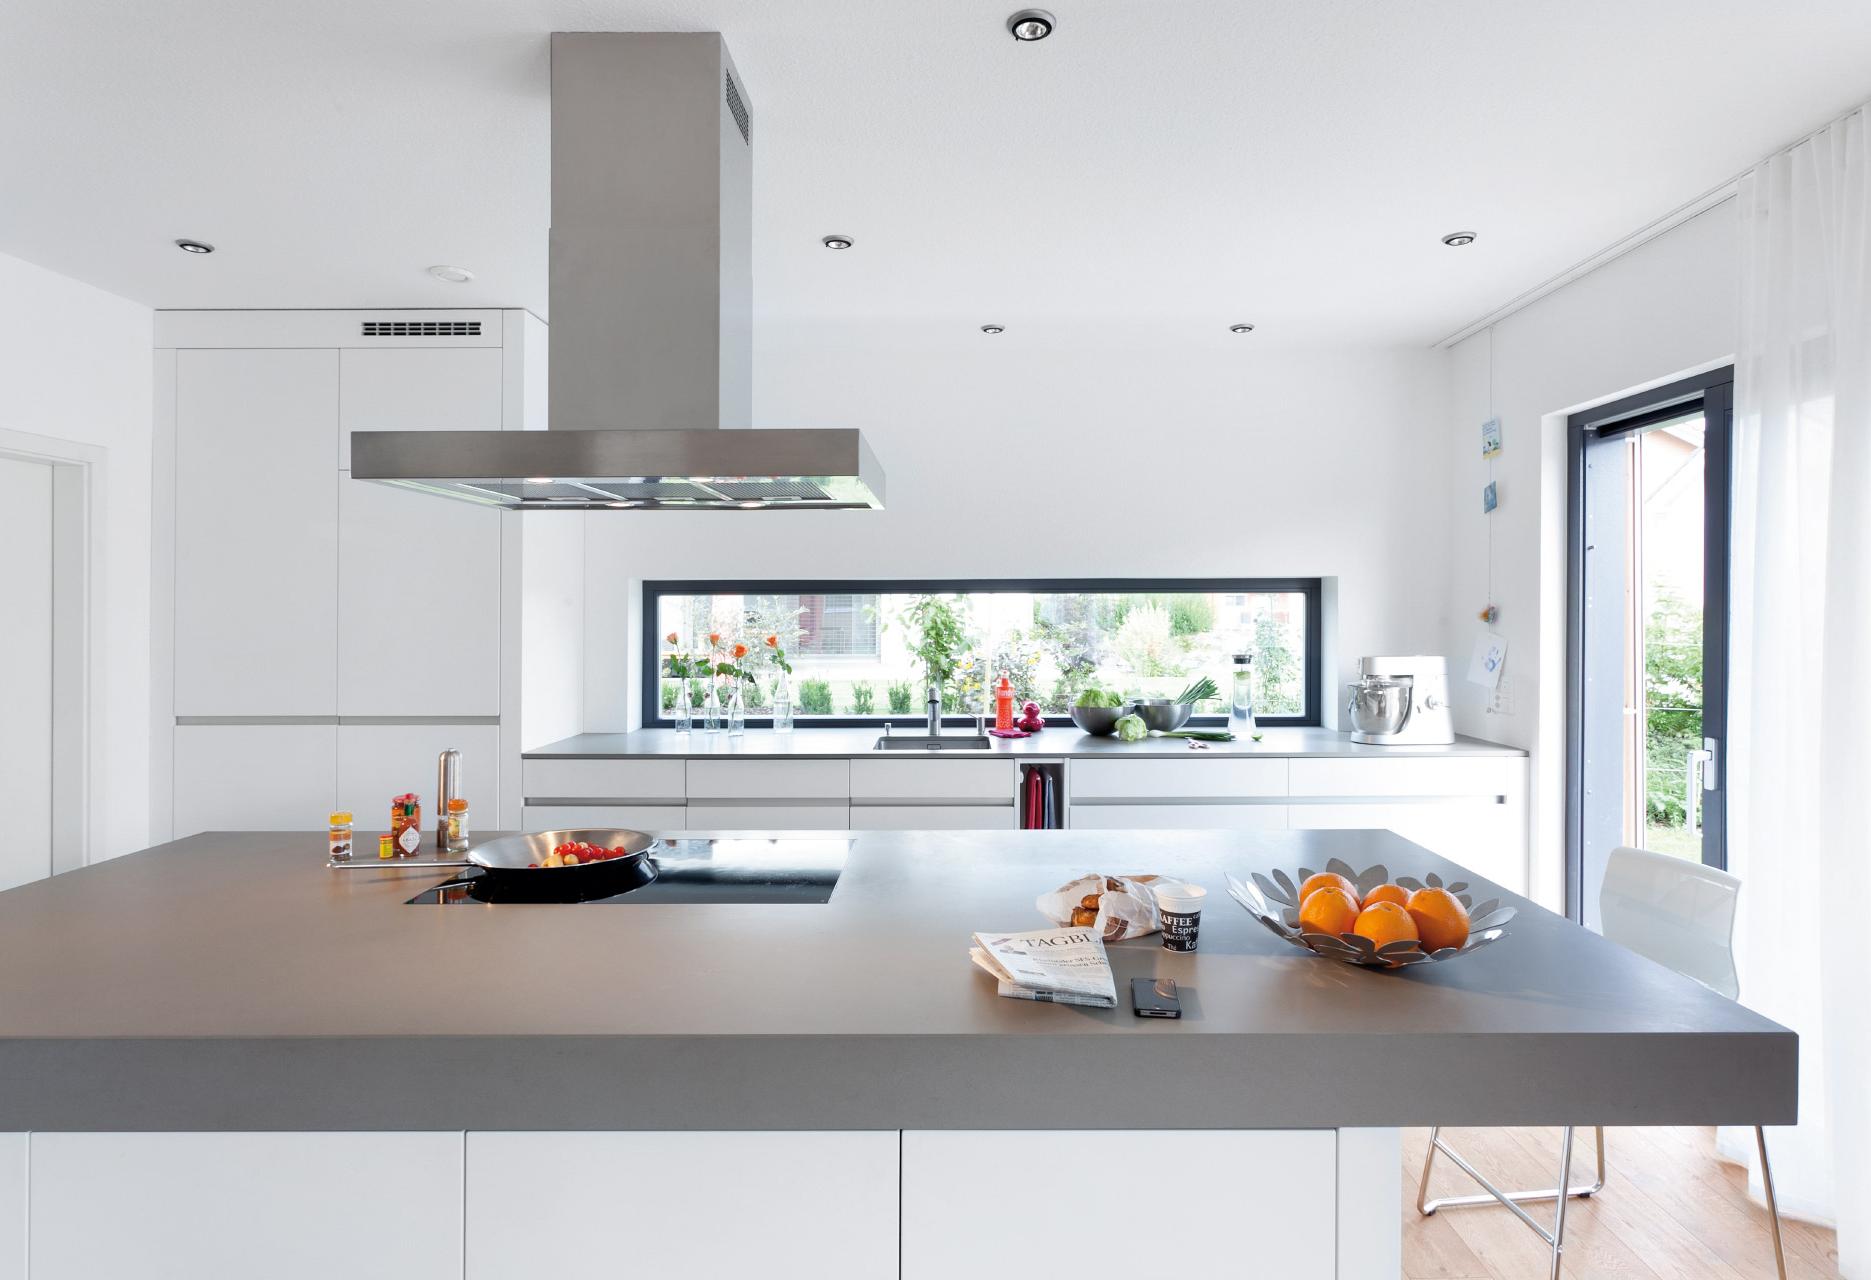 Very modern kitchen in white and gray worktop